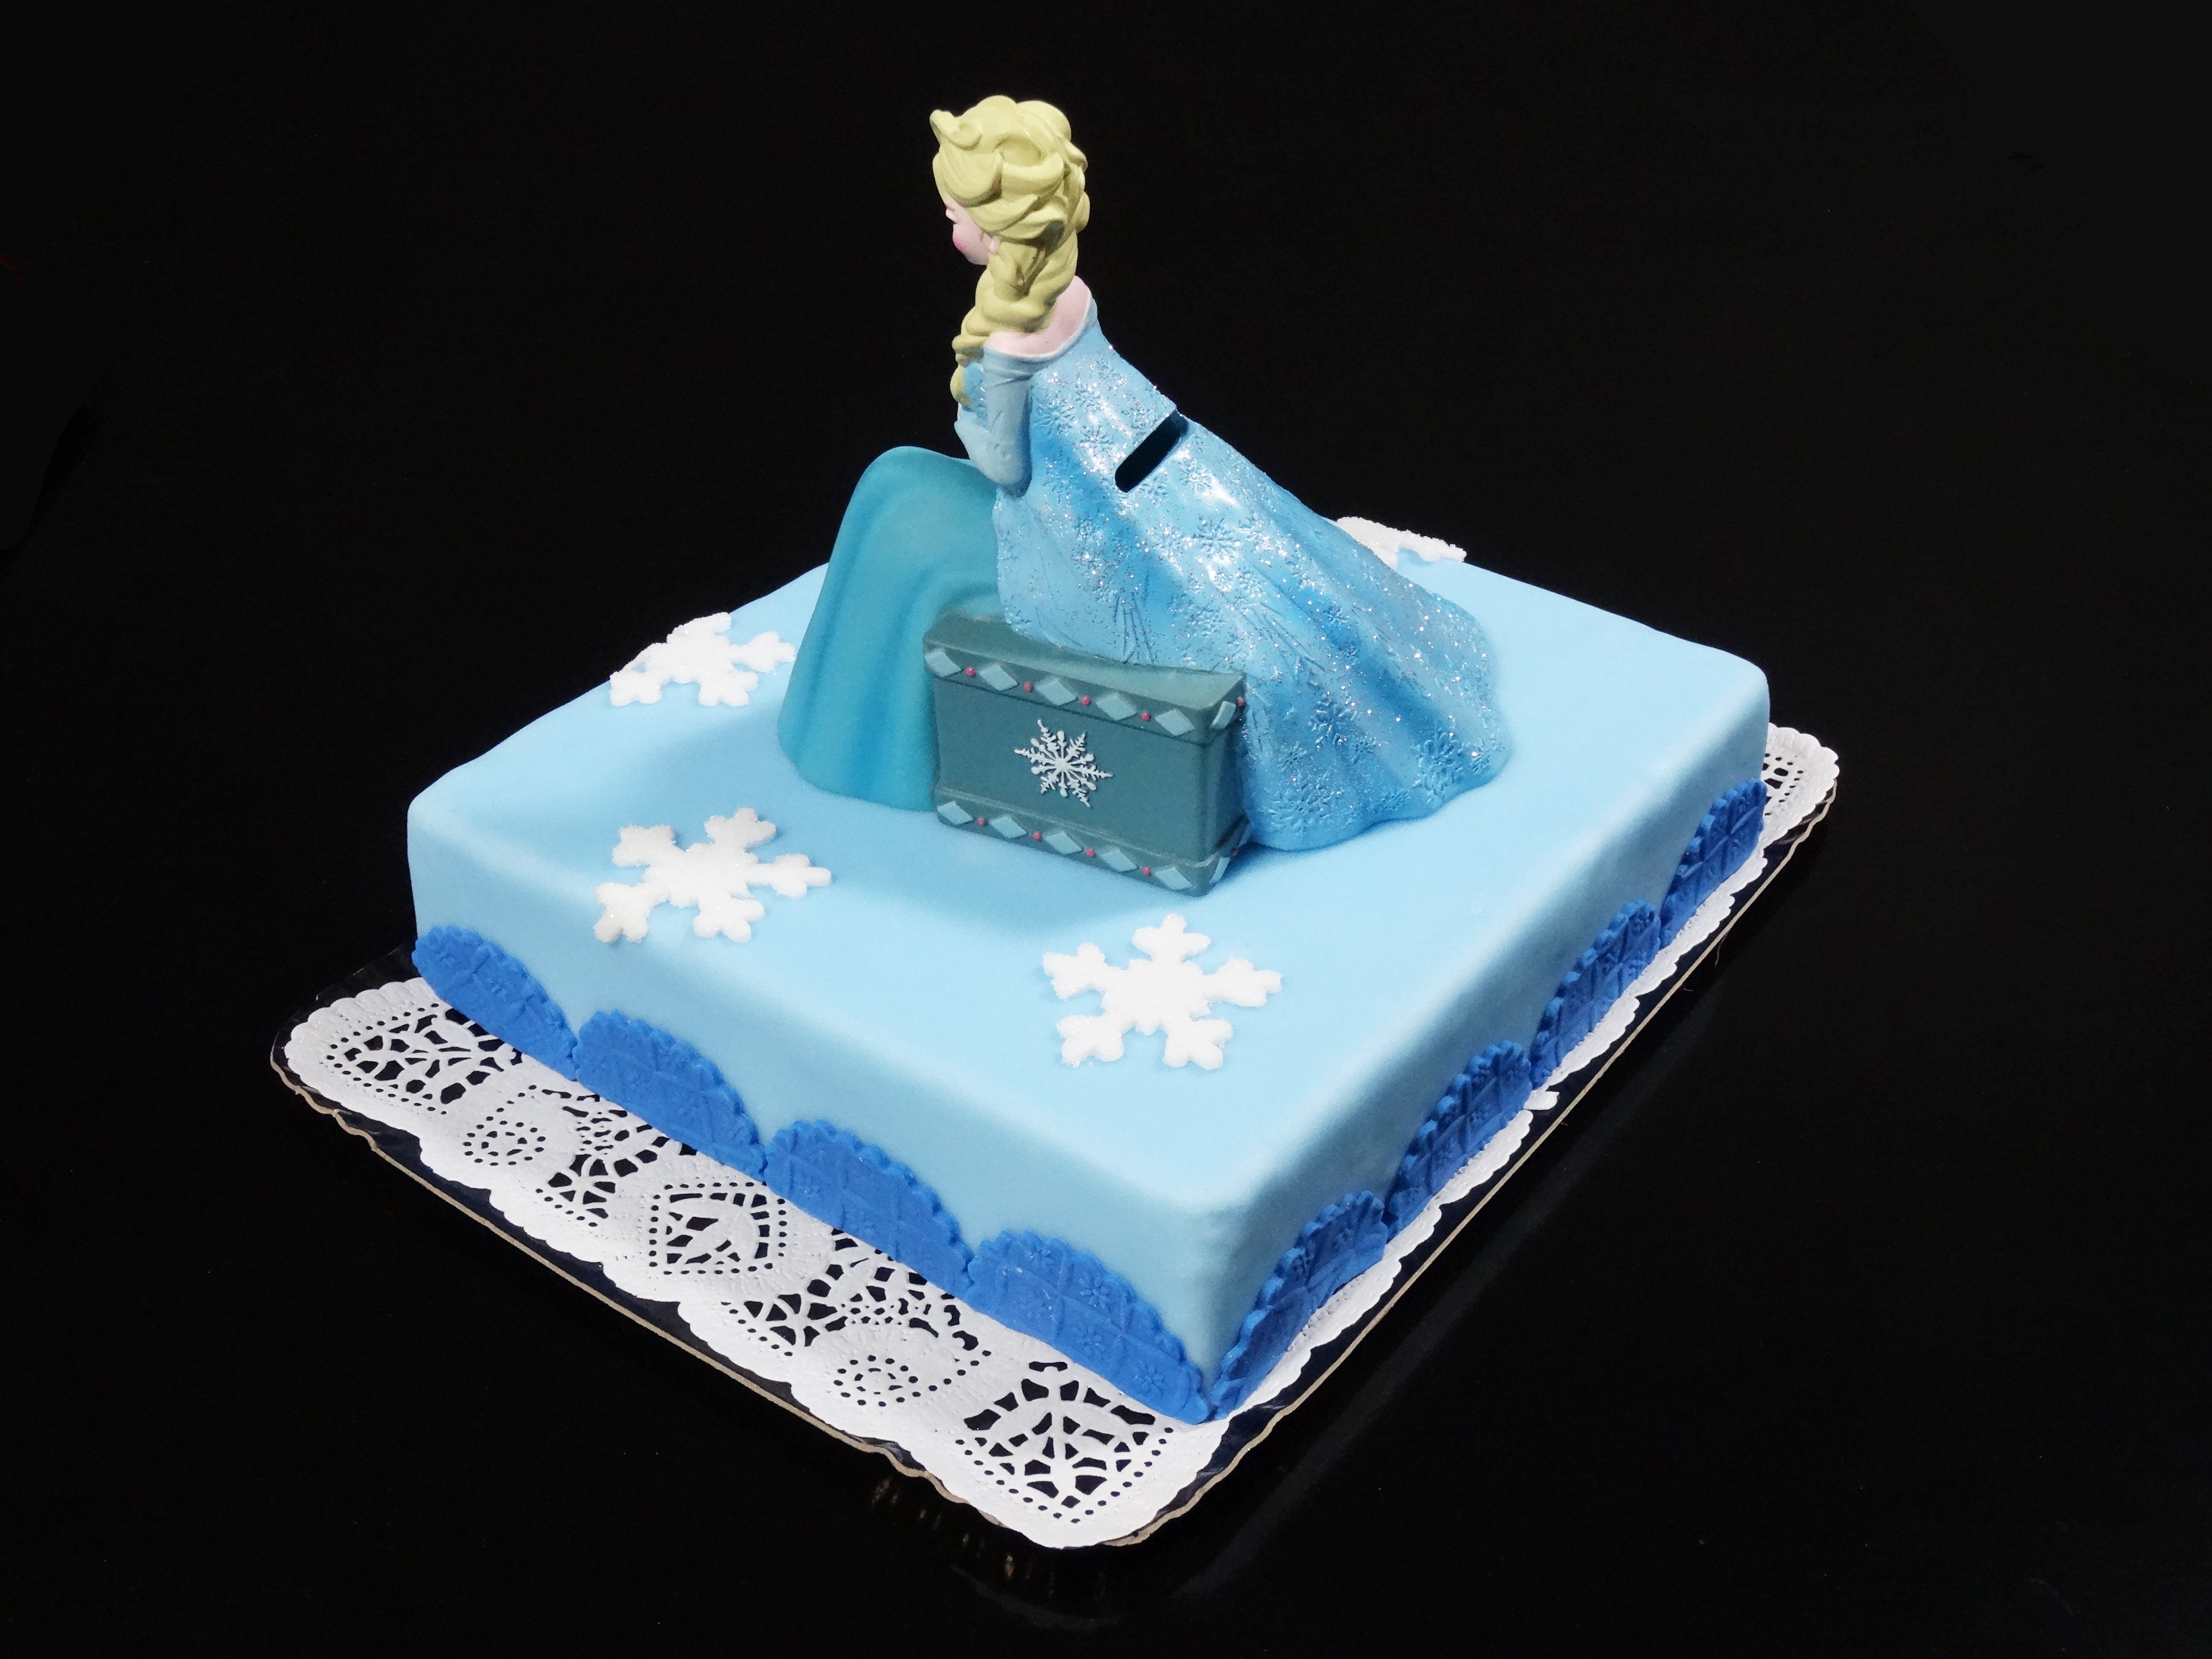 Schneekönigin Elsa Sparkässeli-Torte